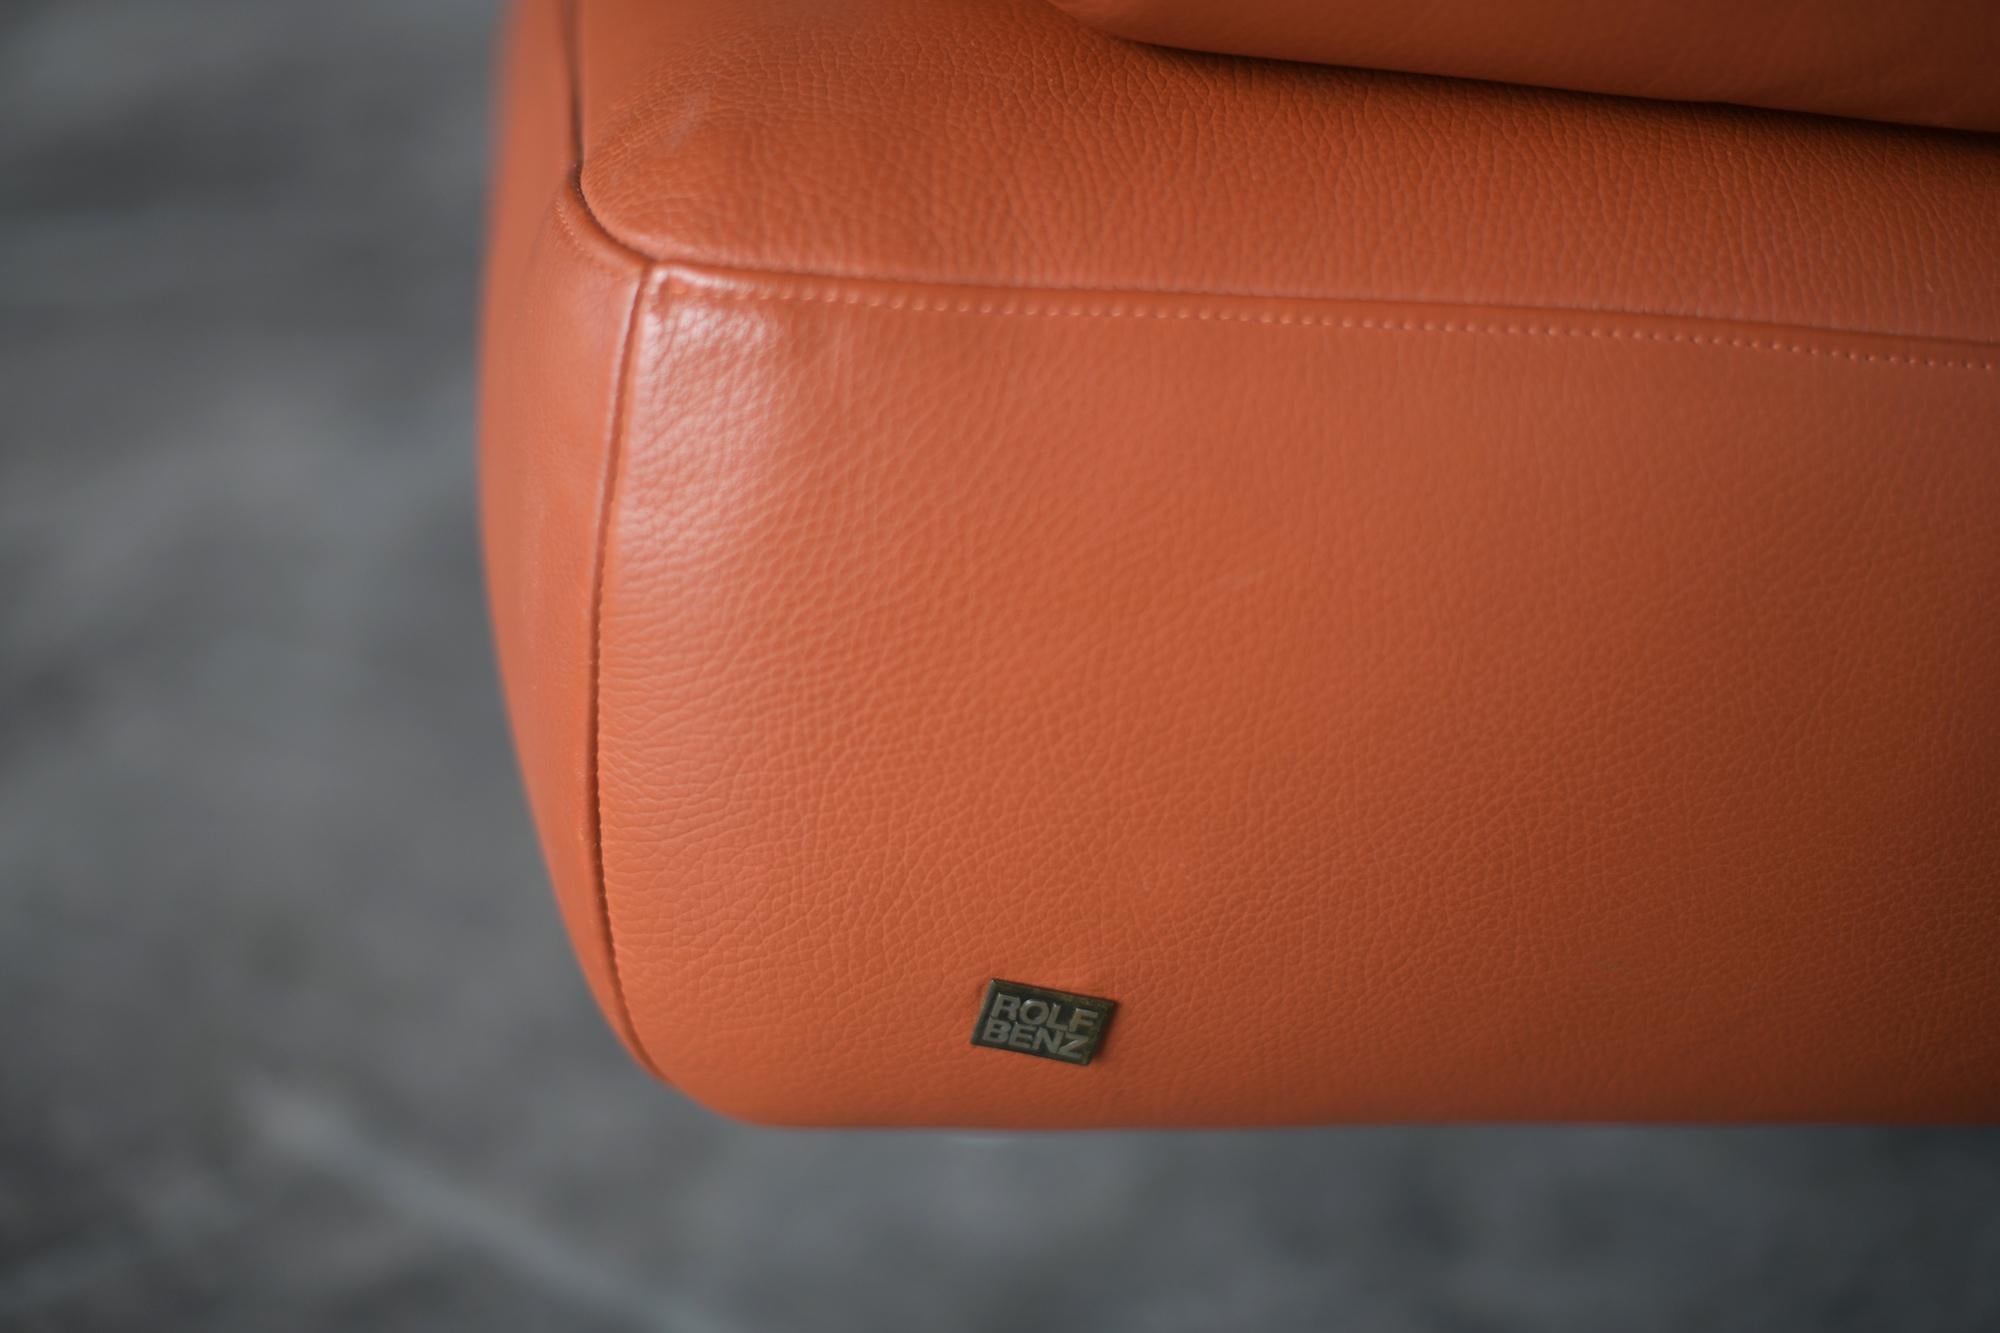 Orange Leather Sofa Model 2700, Rolf Benz, Germany, Labeled 5